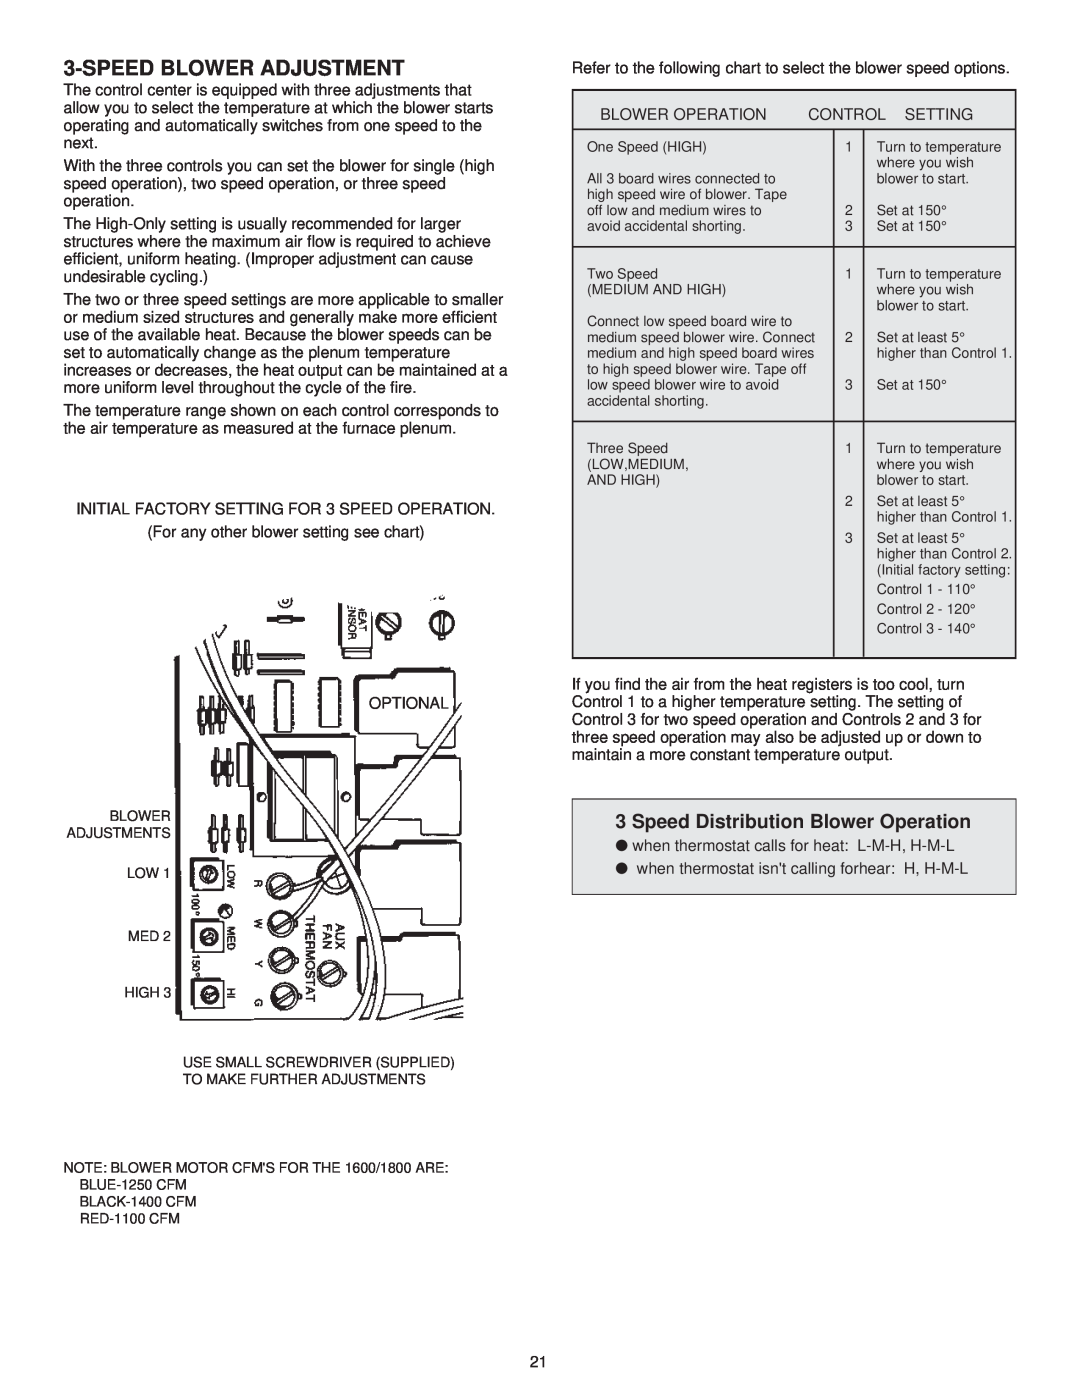 United States Stove 1600, 1800 manual Speedblower Adjustment, Speed Distribution Blower Operation 